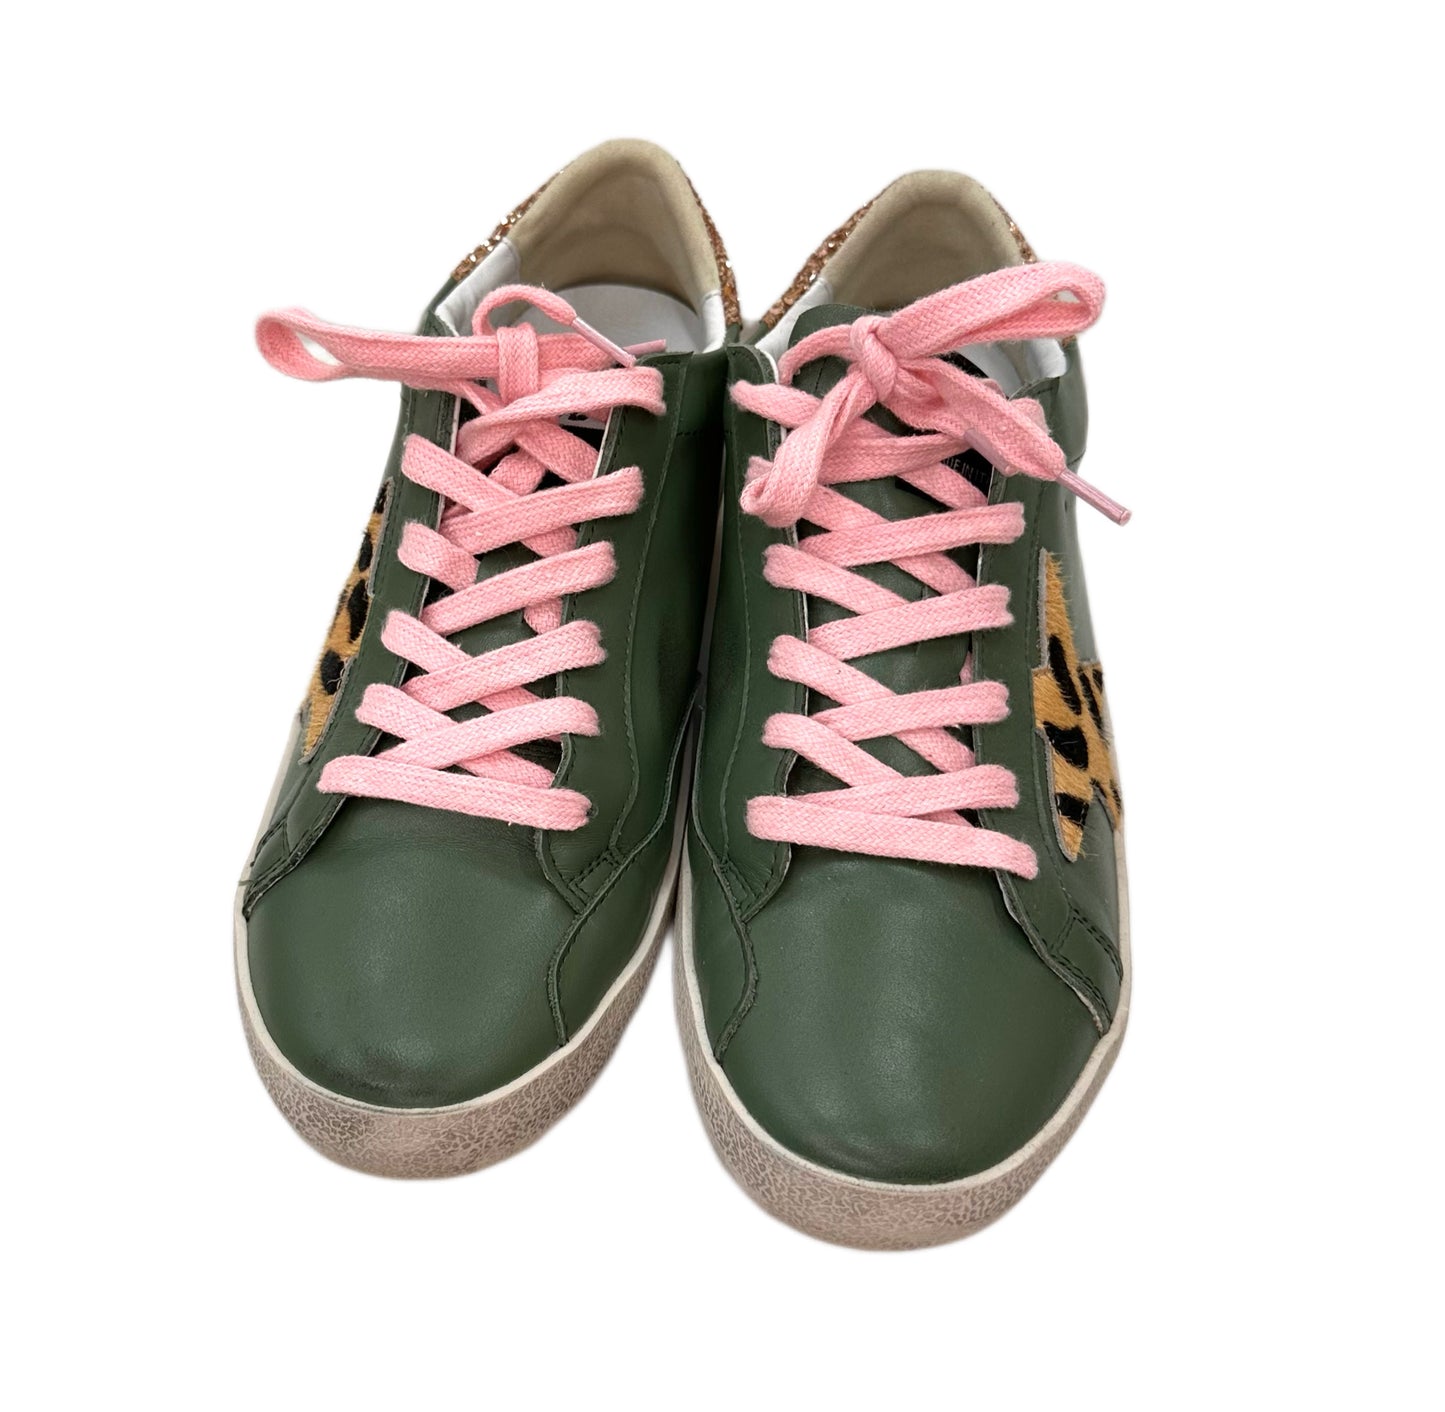 GOLDEN GOOSE Green & Leopard Sneakers Size 40